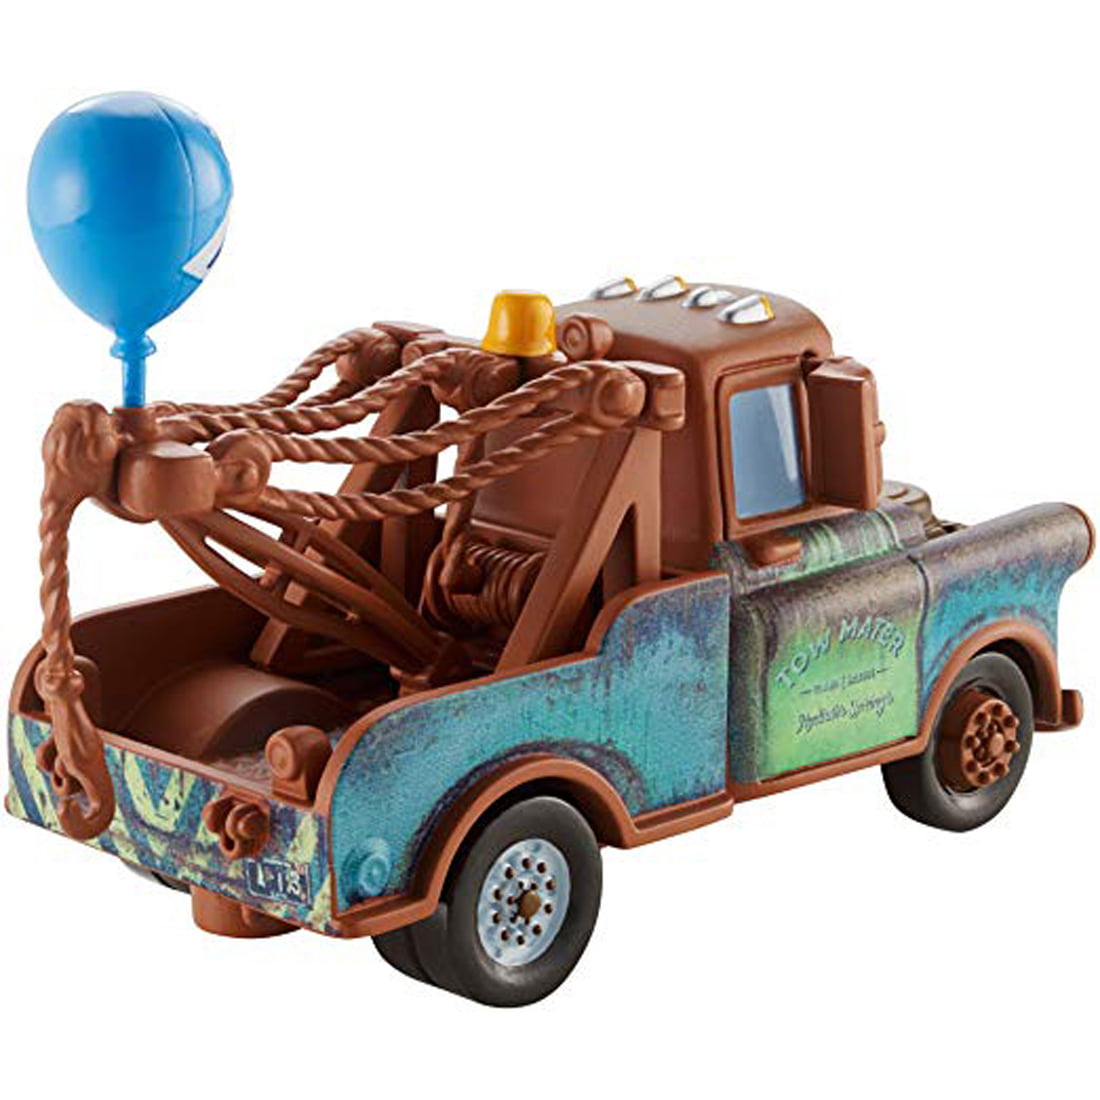 Disney cars - vehicule mater avec ballon, vehicules-garages